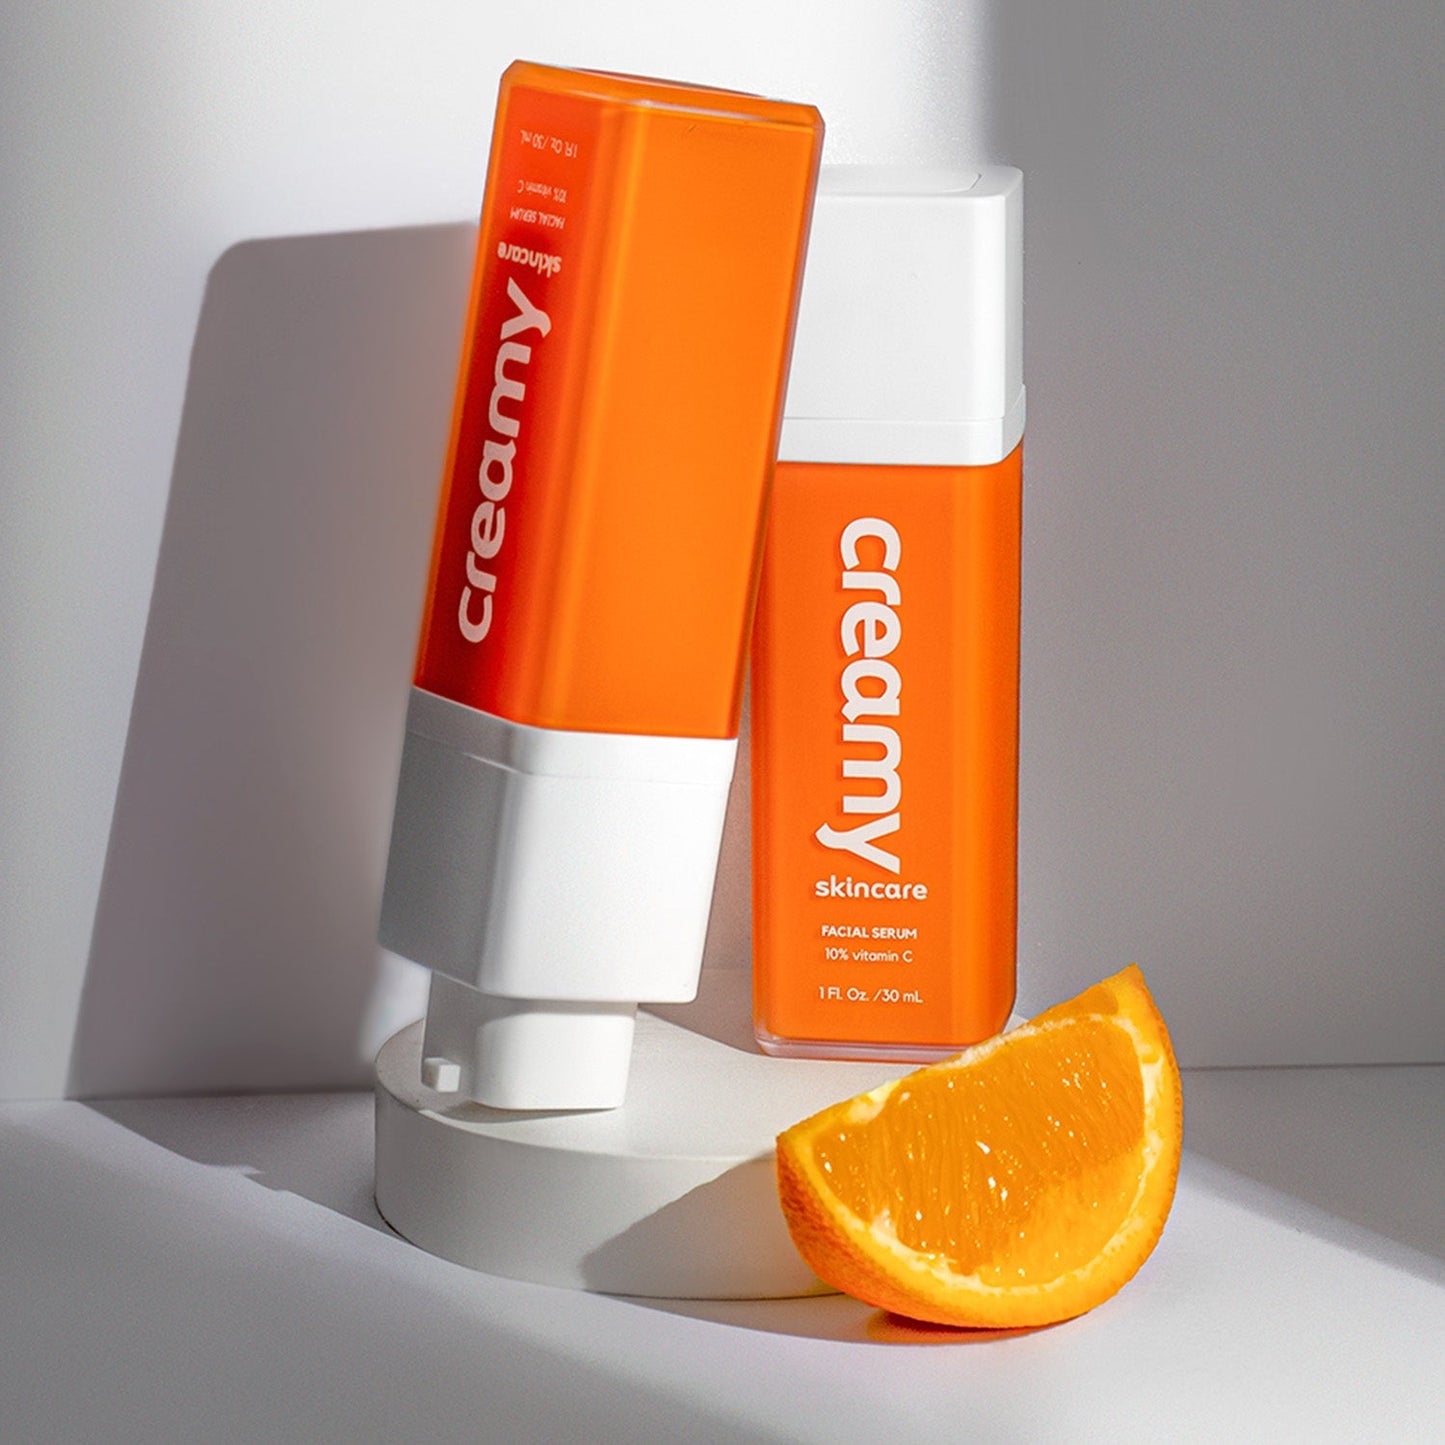 Brightening 10% Vitamin C Serum - Creamy Skincare